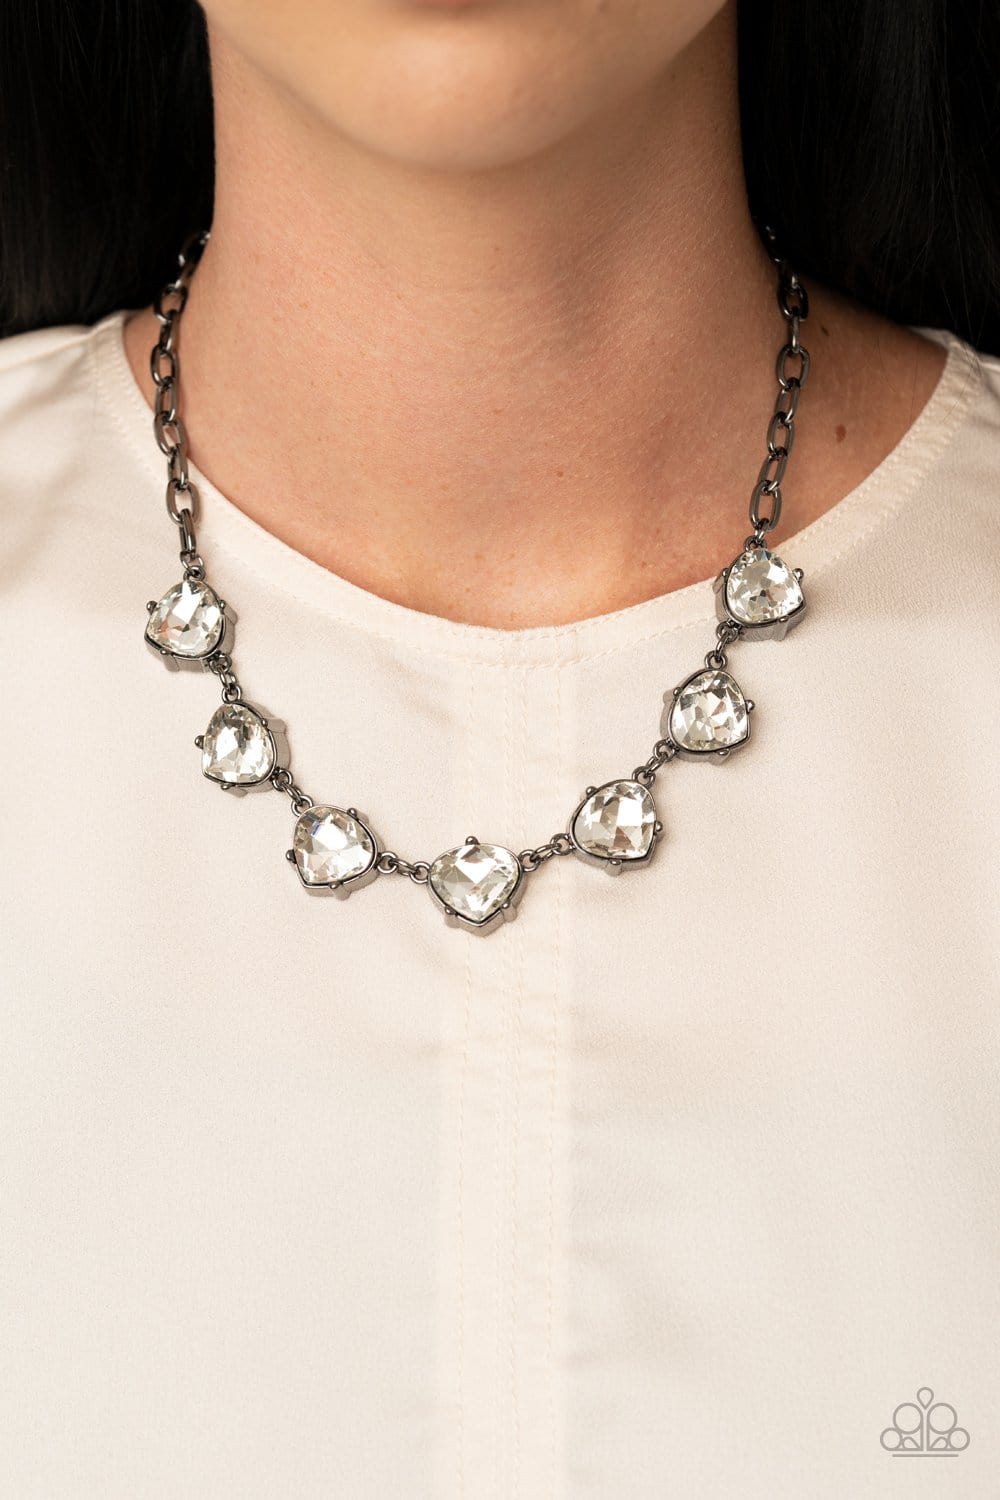 Paparazzi Backed Into A Corner - Black Gunmetal - Necklace & Earrings | $5  Jewelry with Ashley Swint